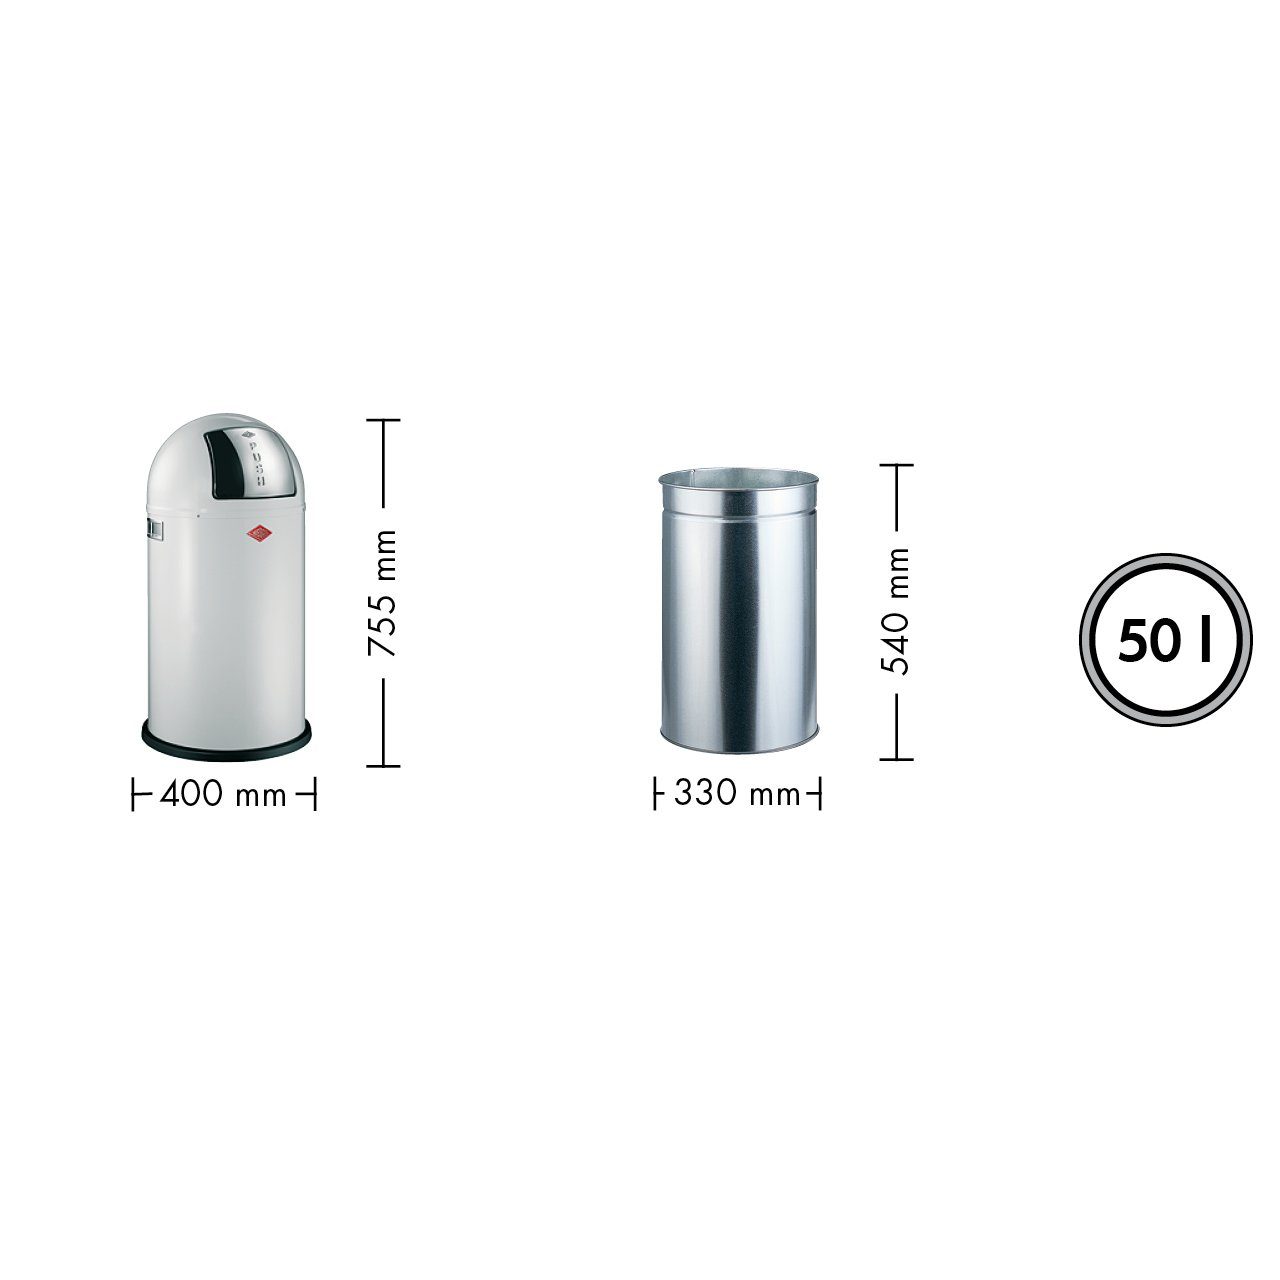 Warm 50 WESCO Stahlblech, 50 Liter PUSHBOY Grey Liter, Mülleimer